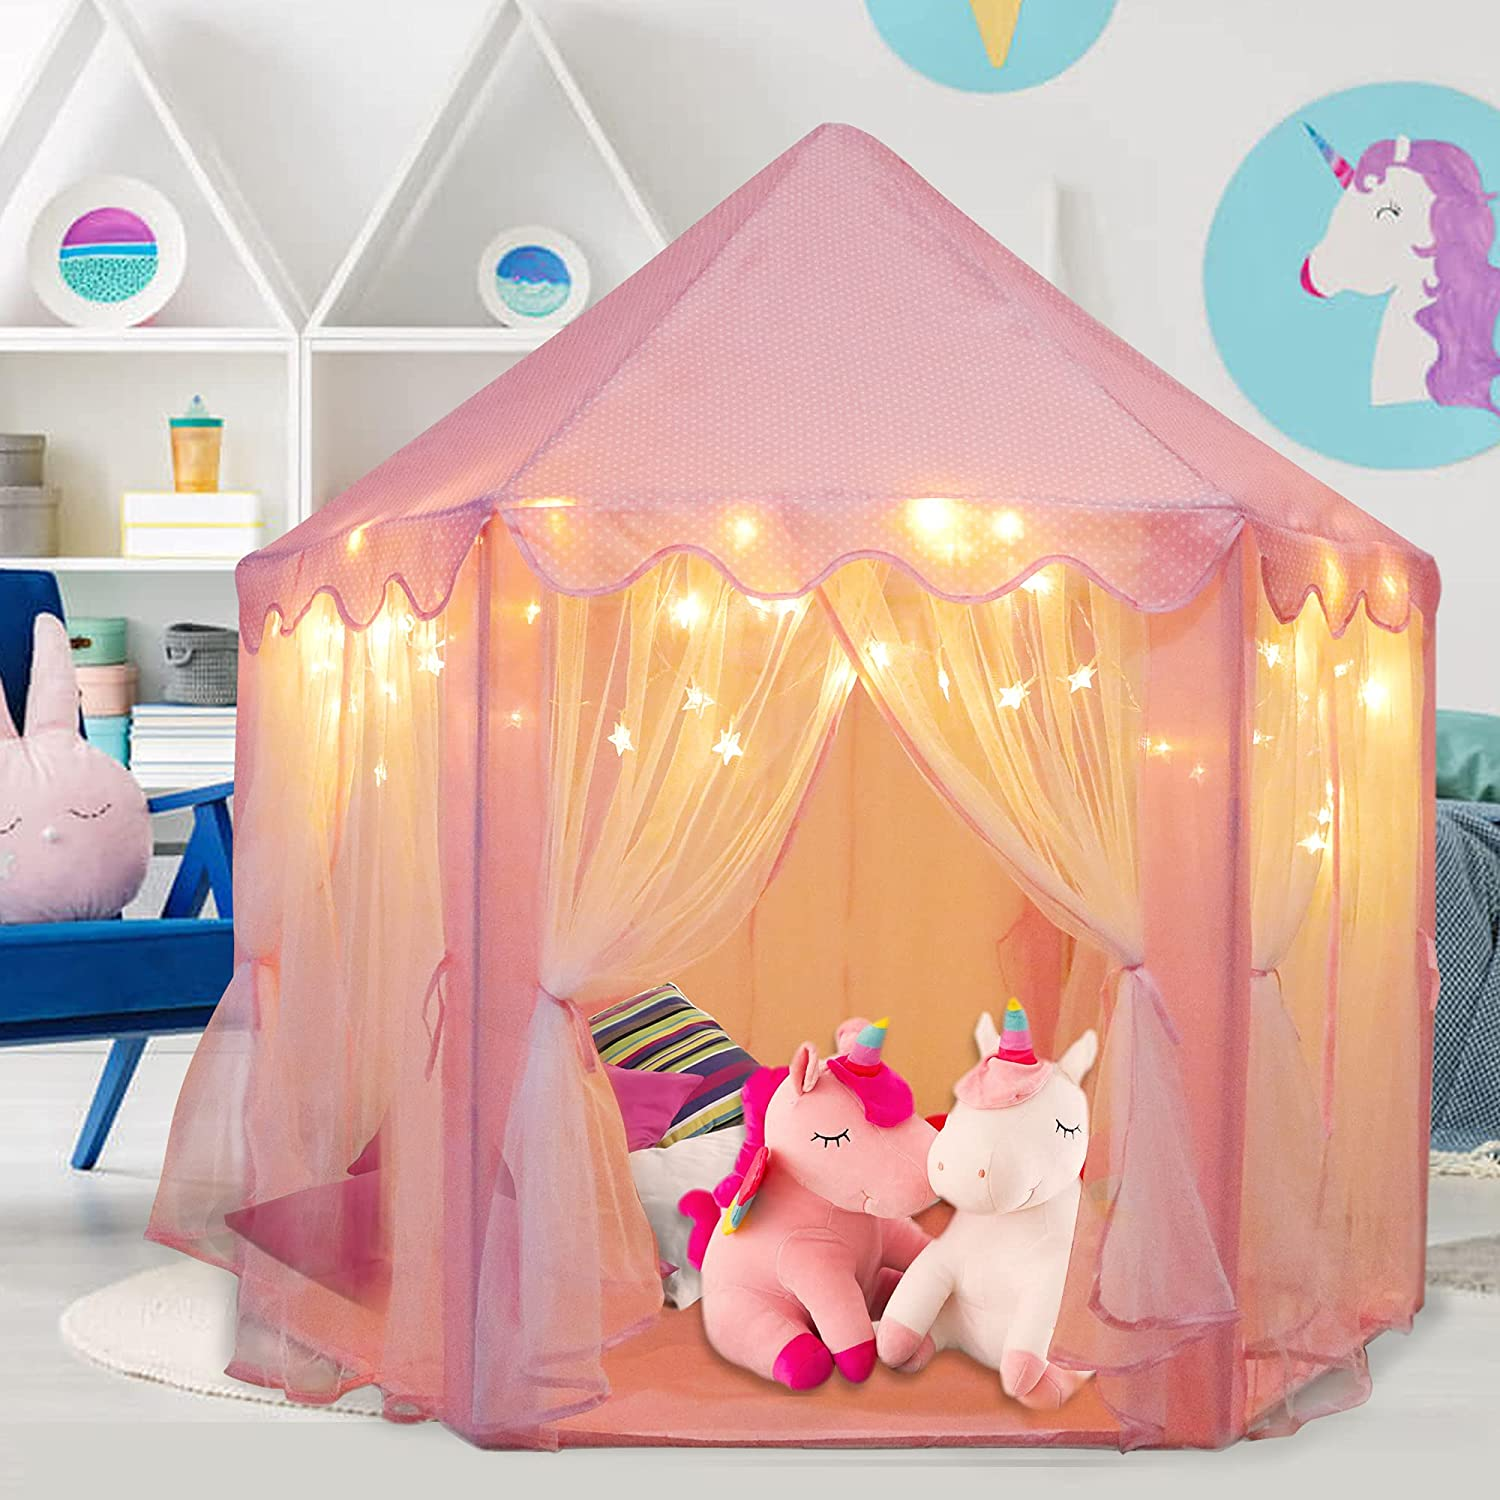 Orian Toys 公主城堡帳篷劇場：女孩點綴粉色塔夫綢室內室外遊戲室39.99 美元